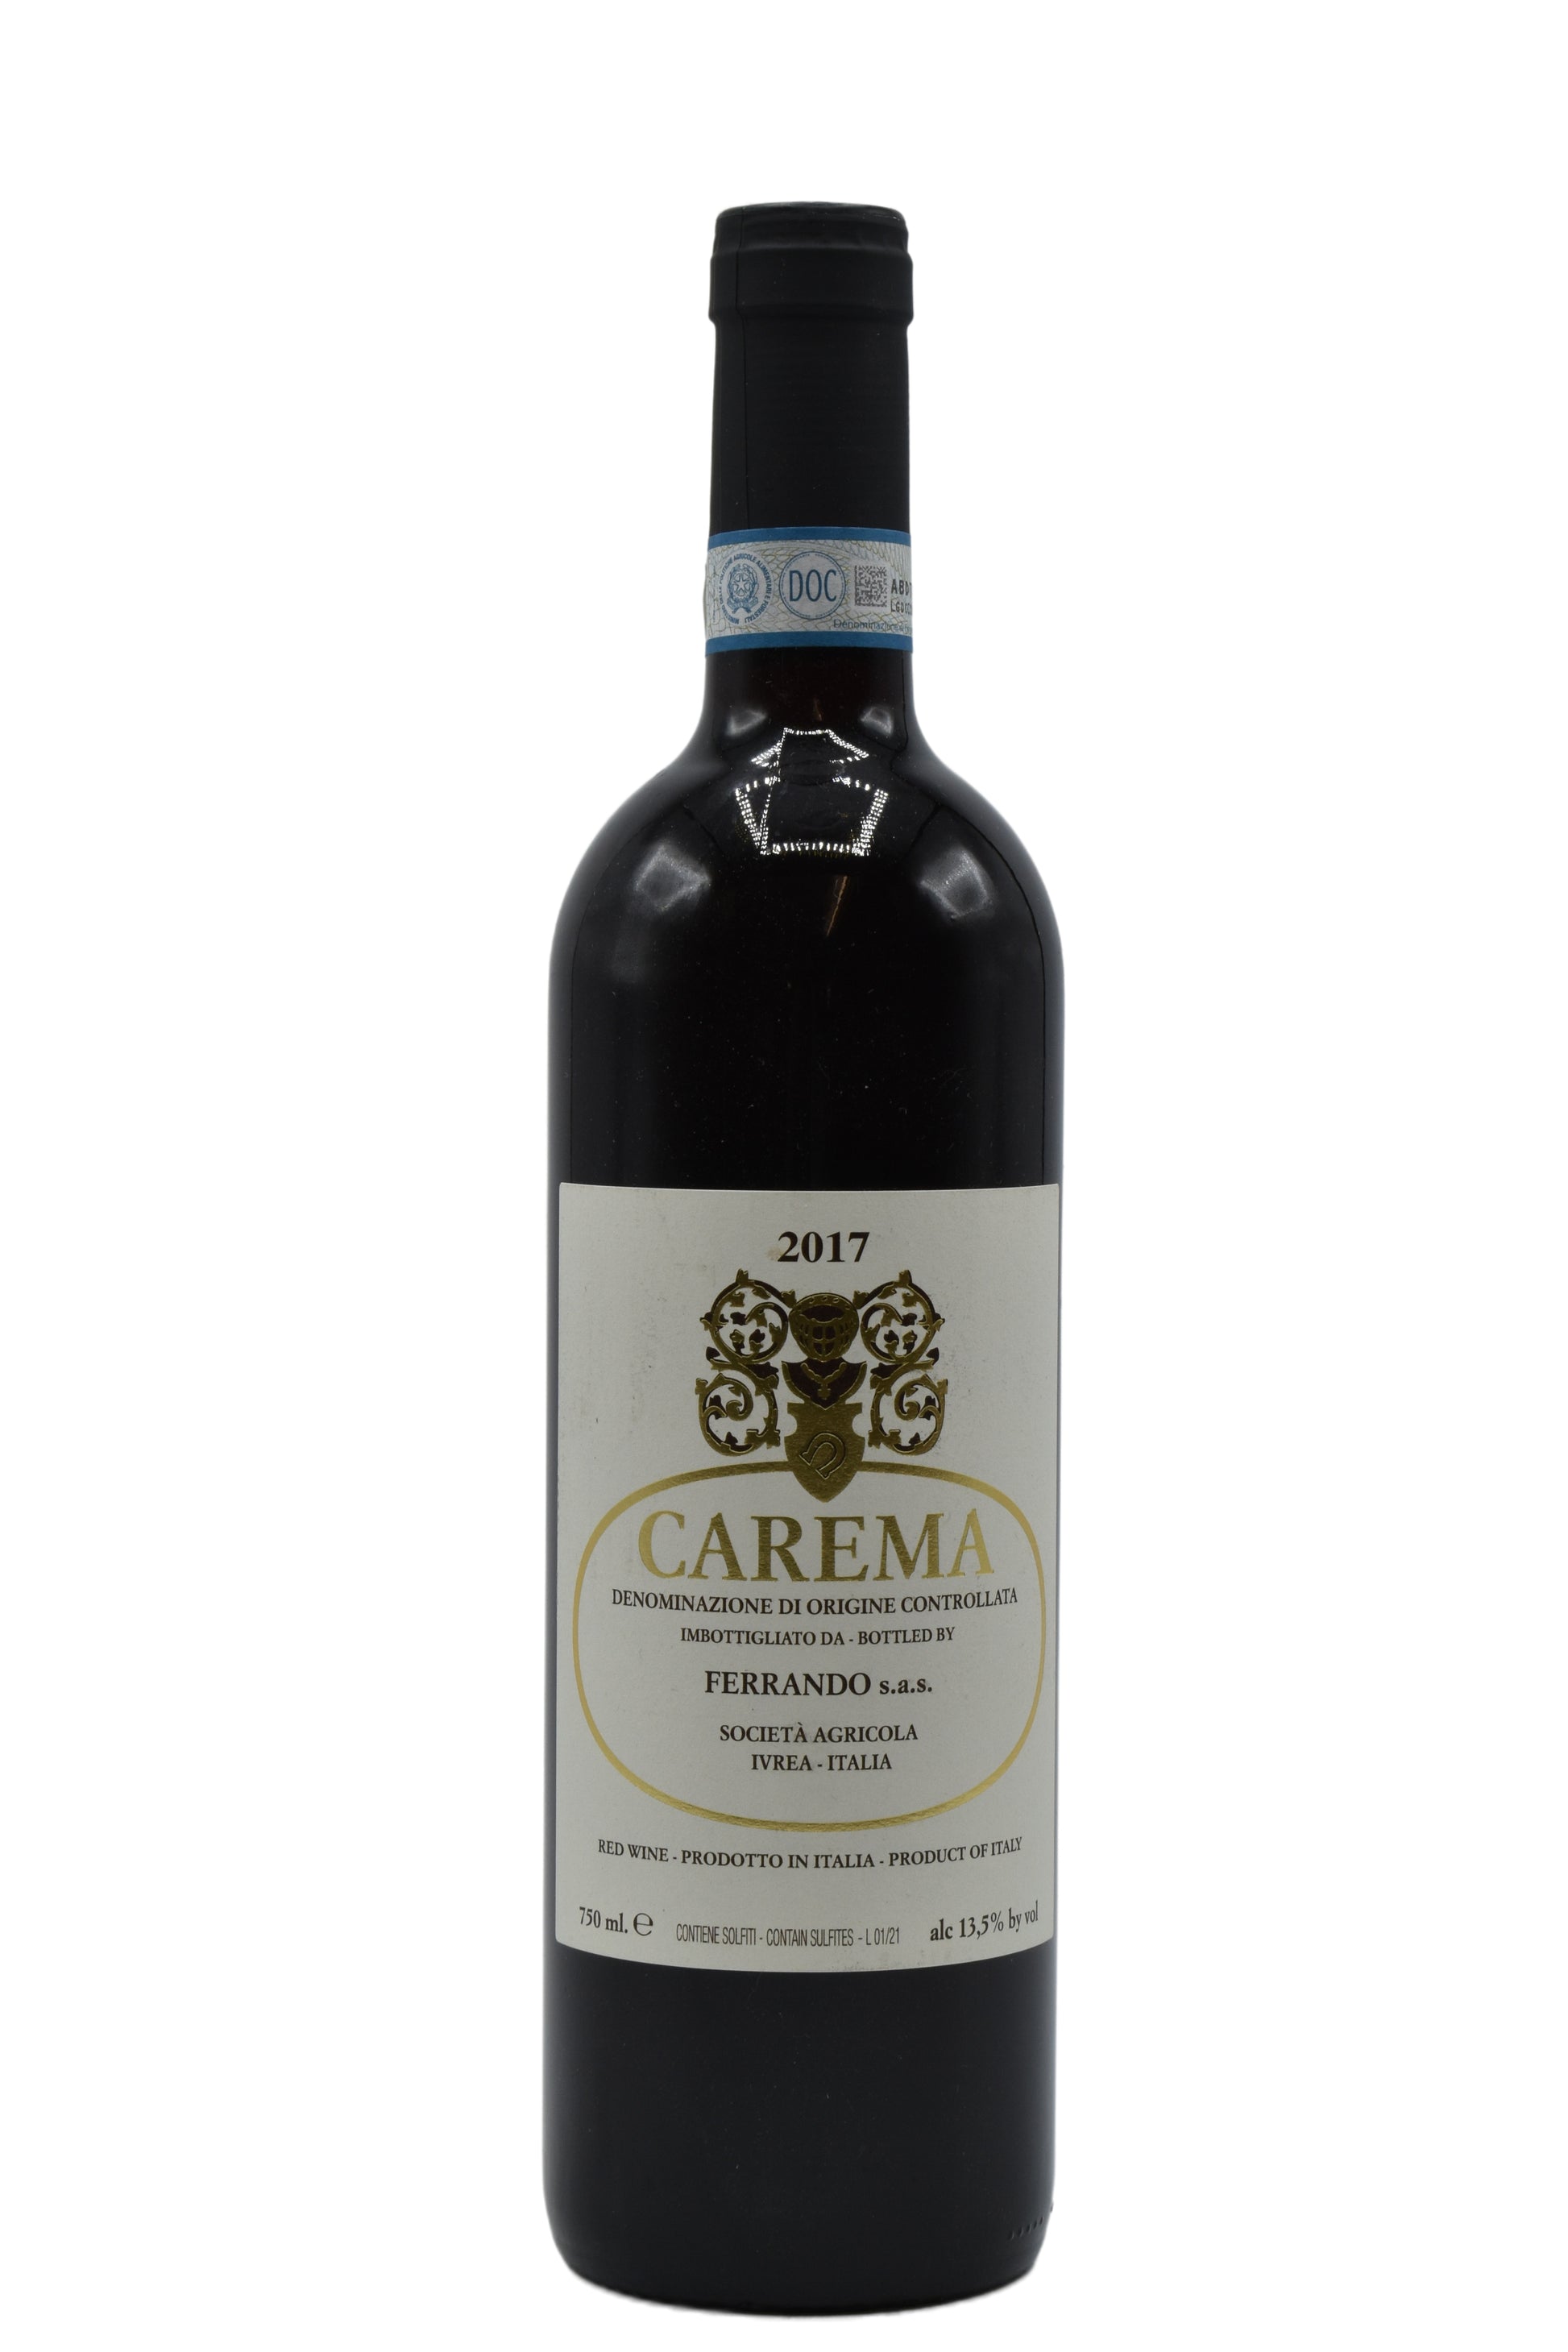 2017 Luigi Ferrando, Carema White Label (Etichetta Bianca) 750ml - Walker Wine Co.